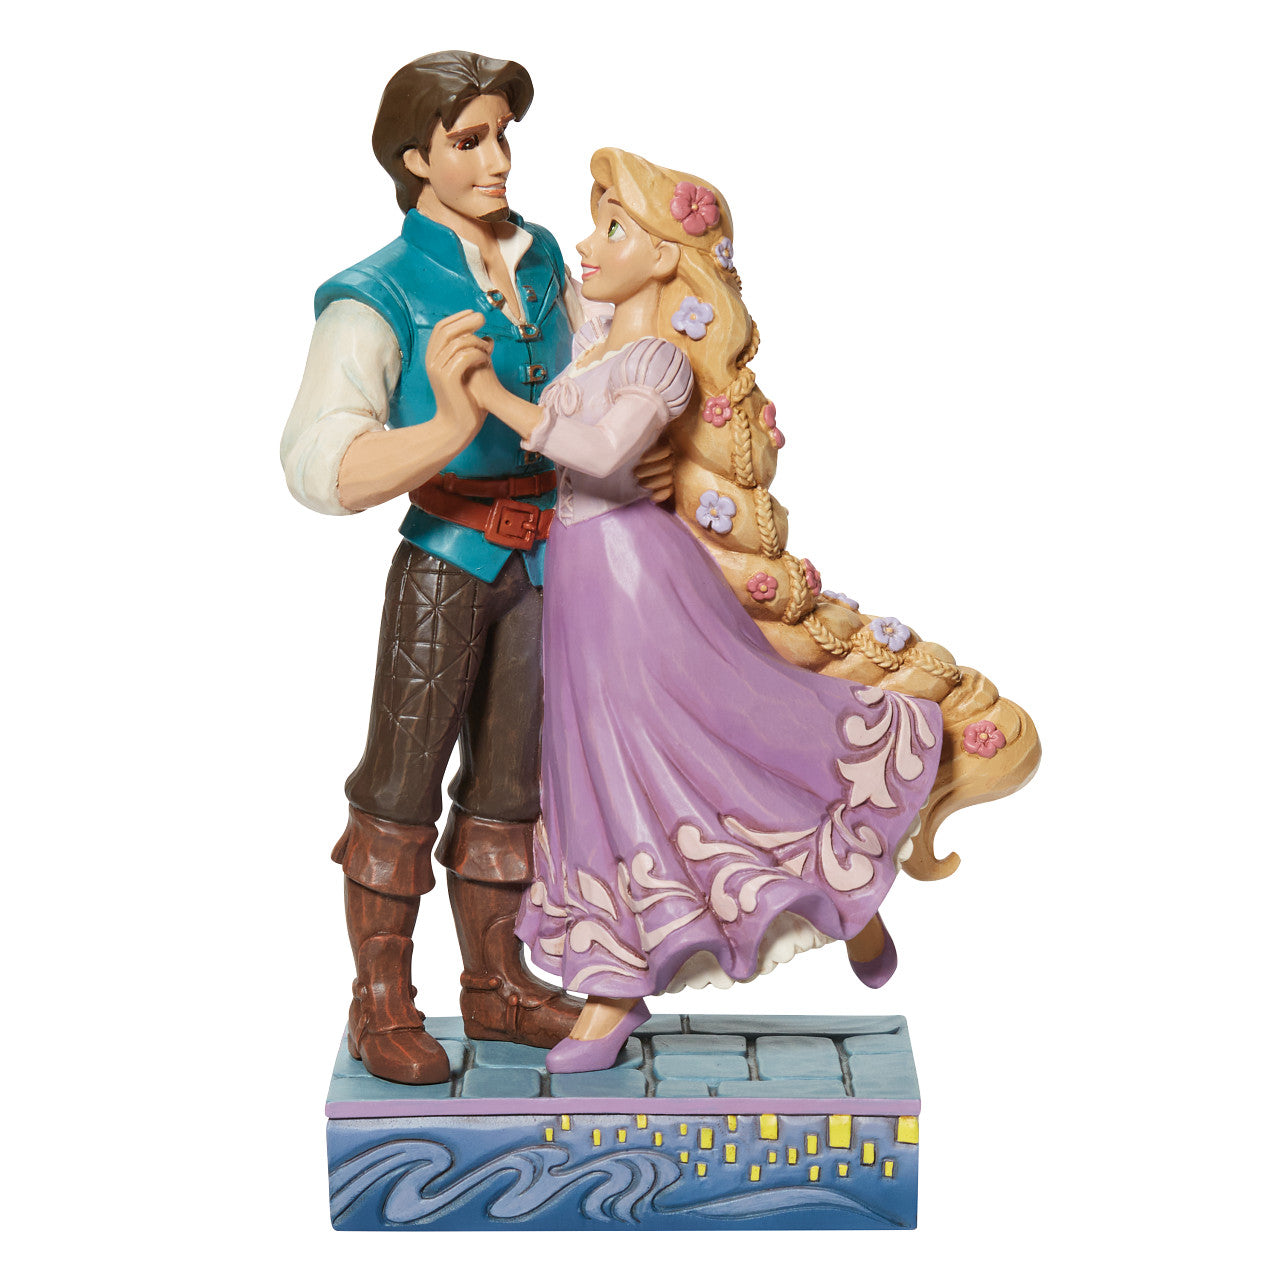 My New Dream - Rapunzel and Flynn Rider Love